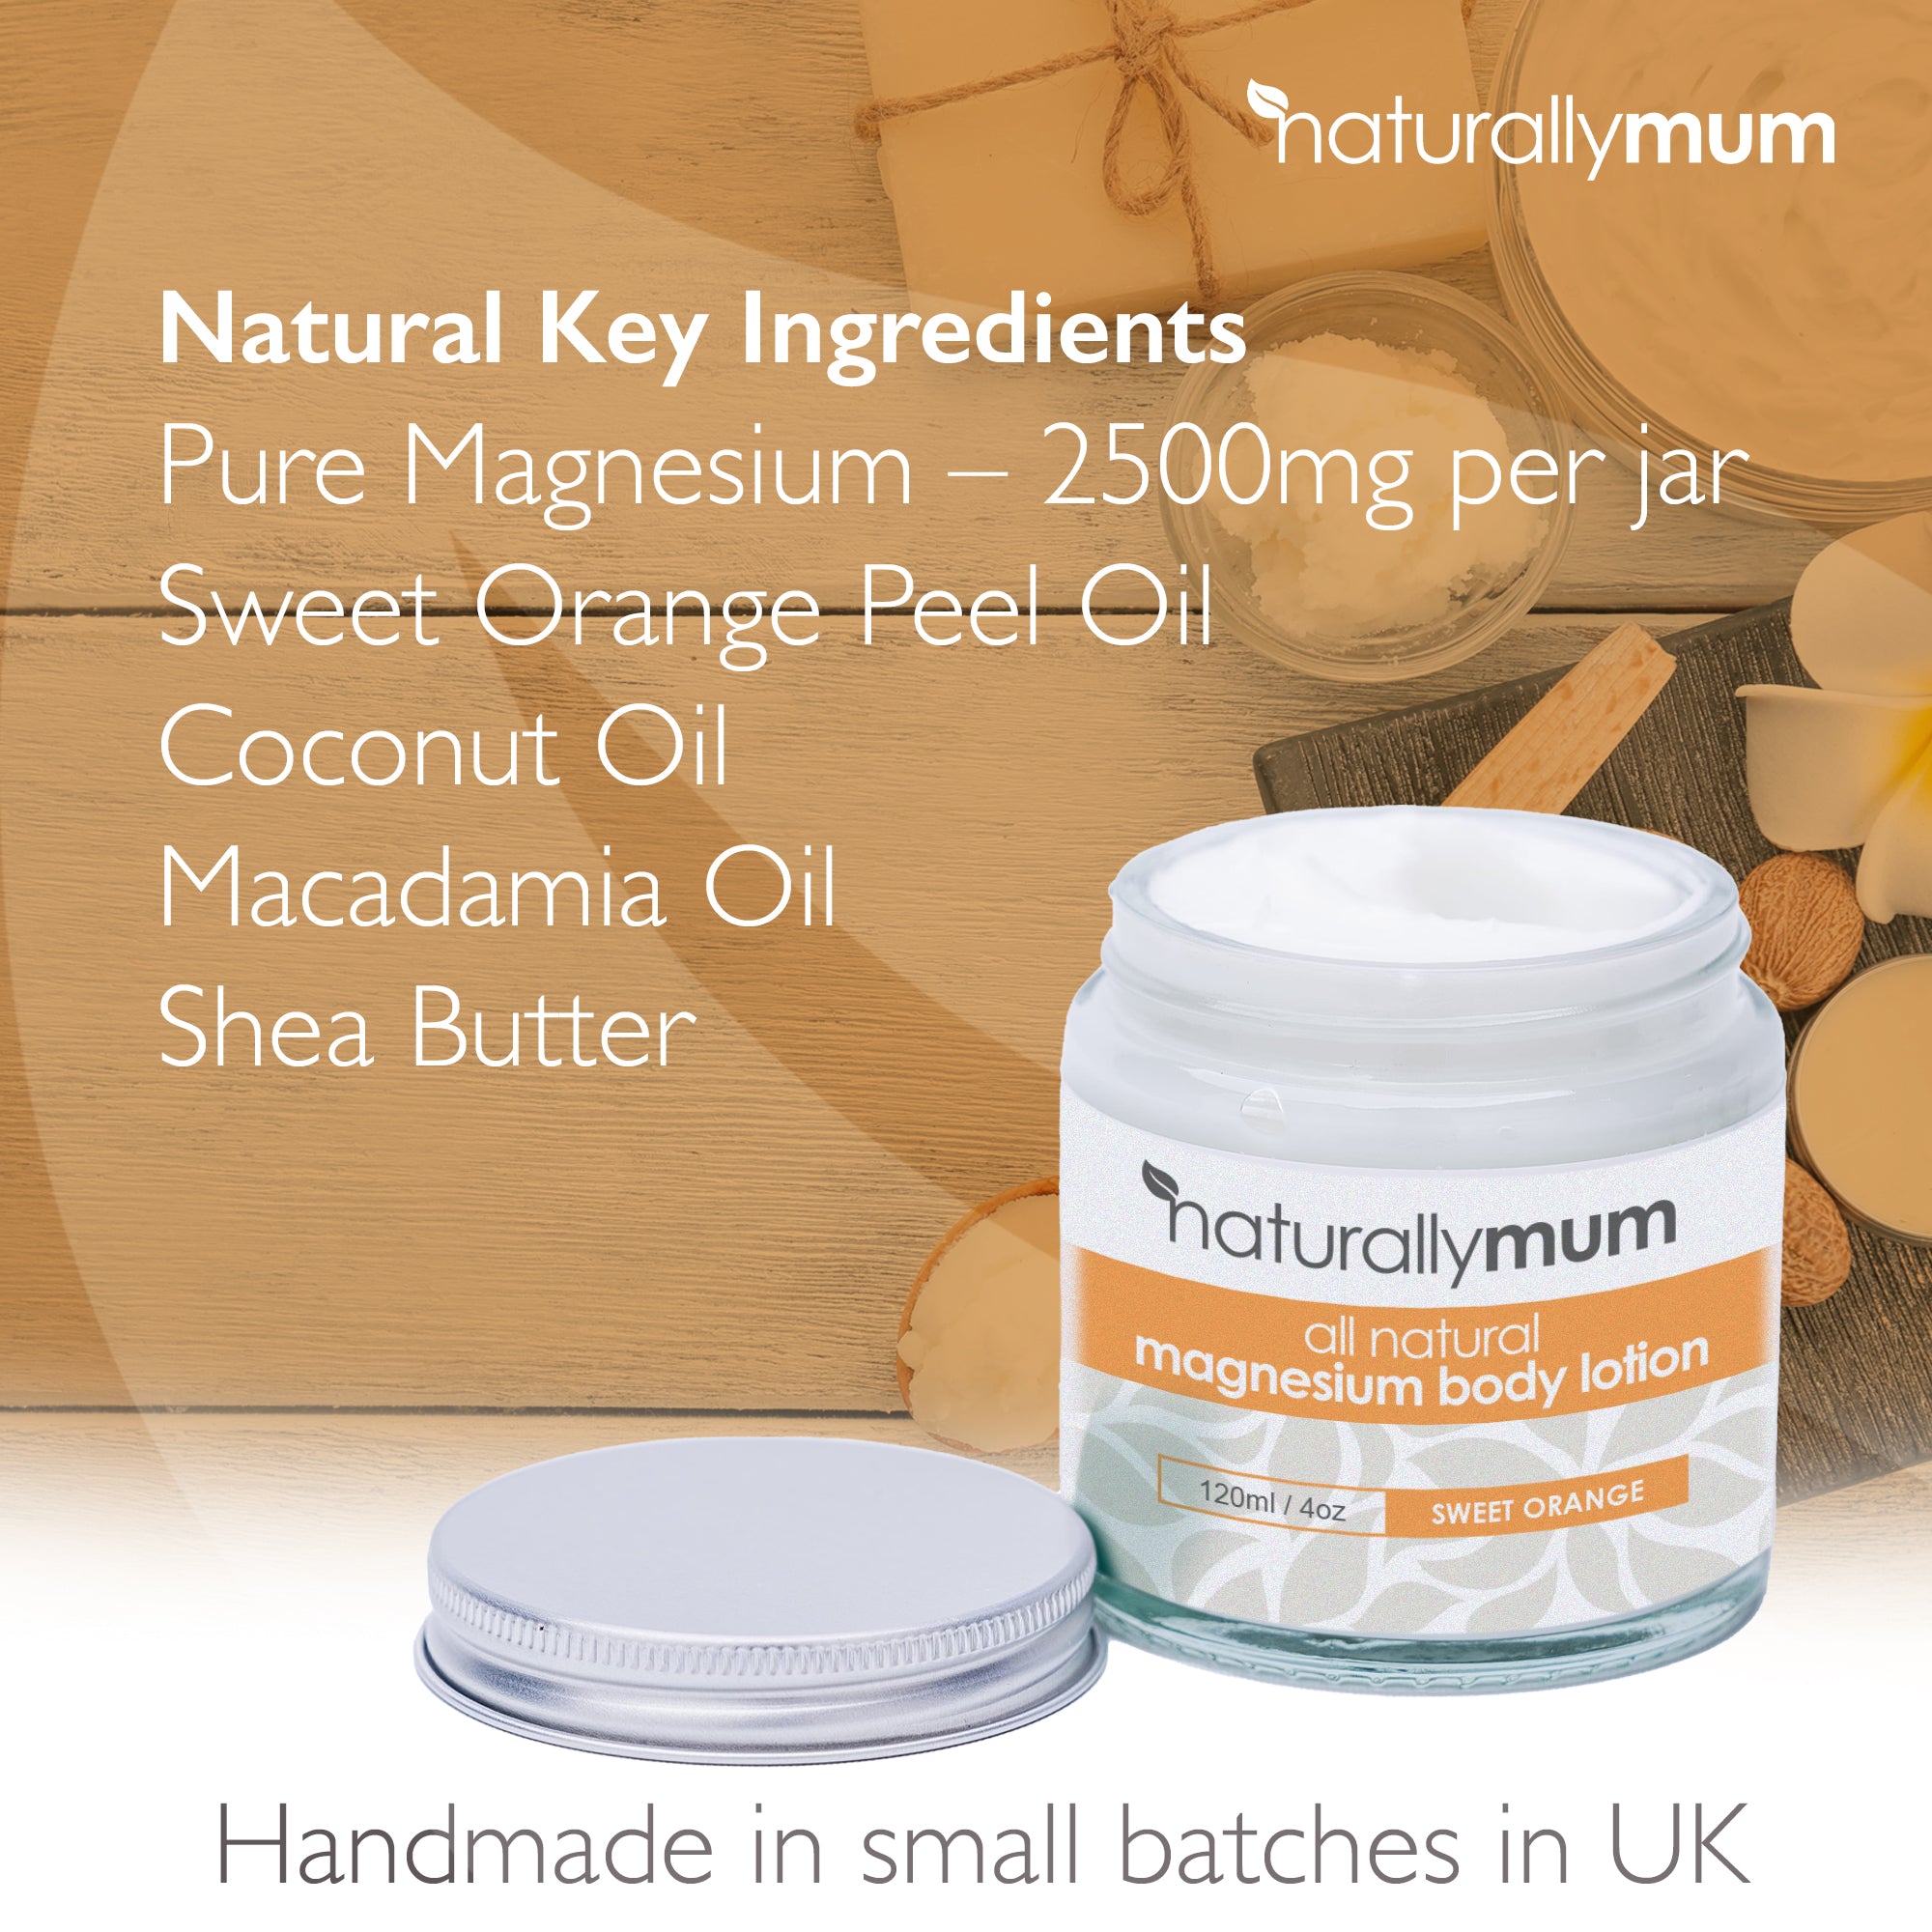 NaturallyMum Magnesium Body Lotion | Sweet Orange | 4fl oz